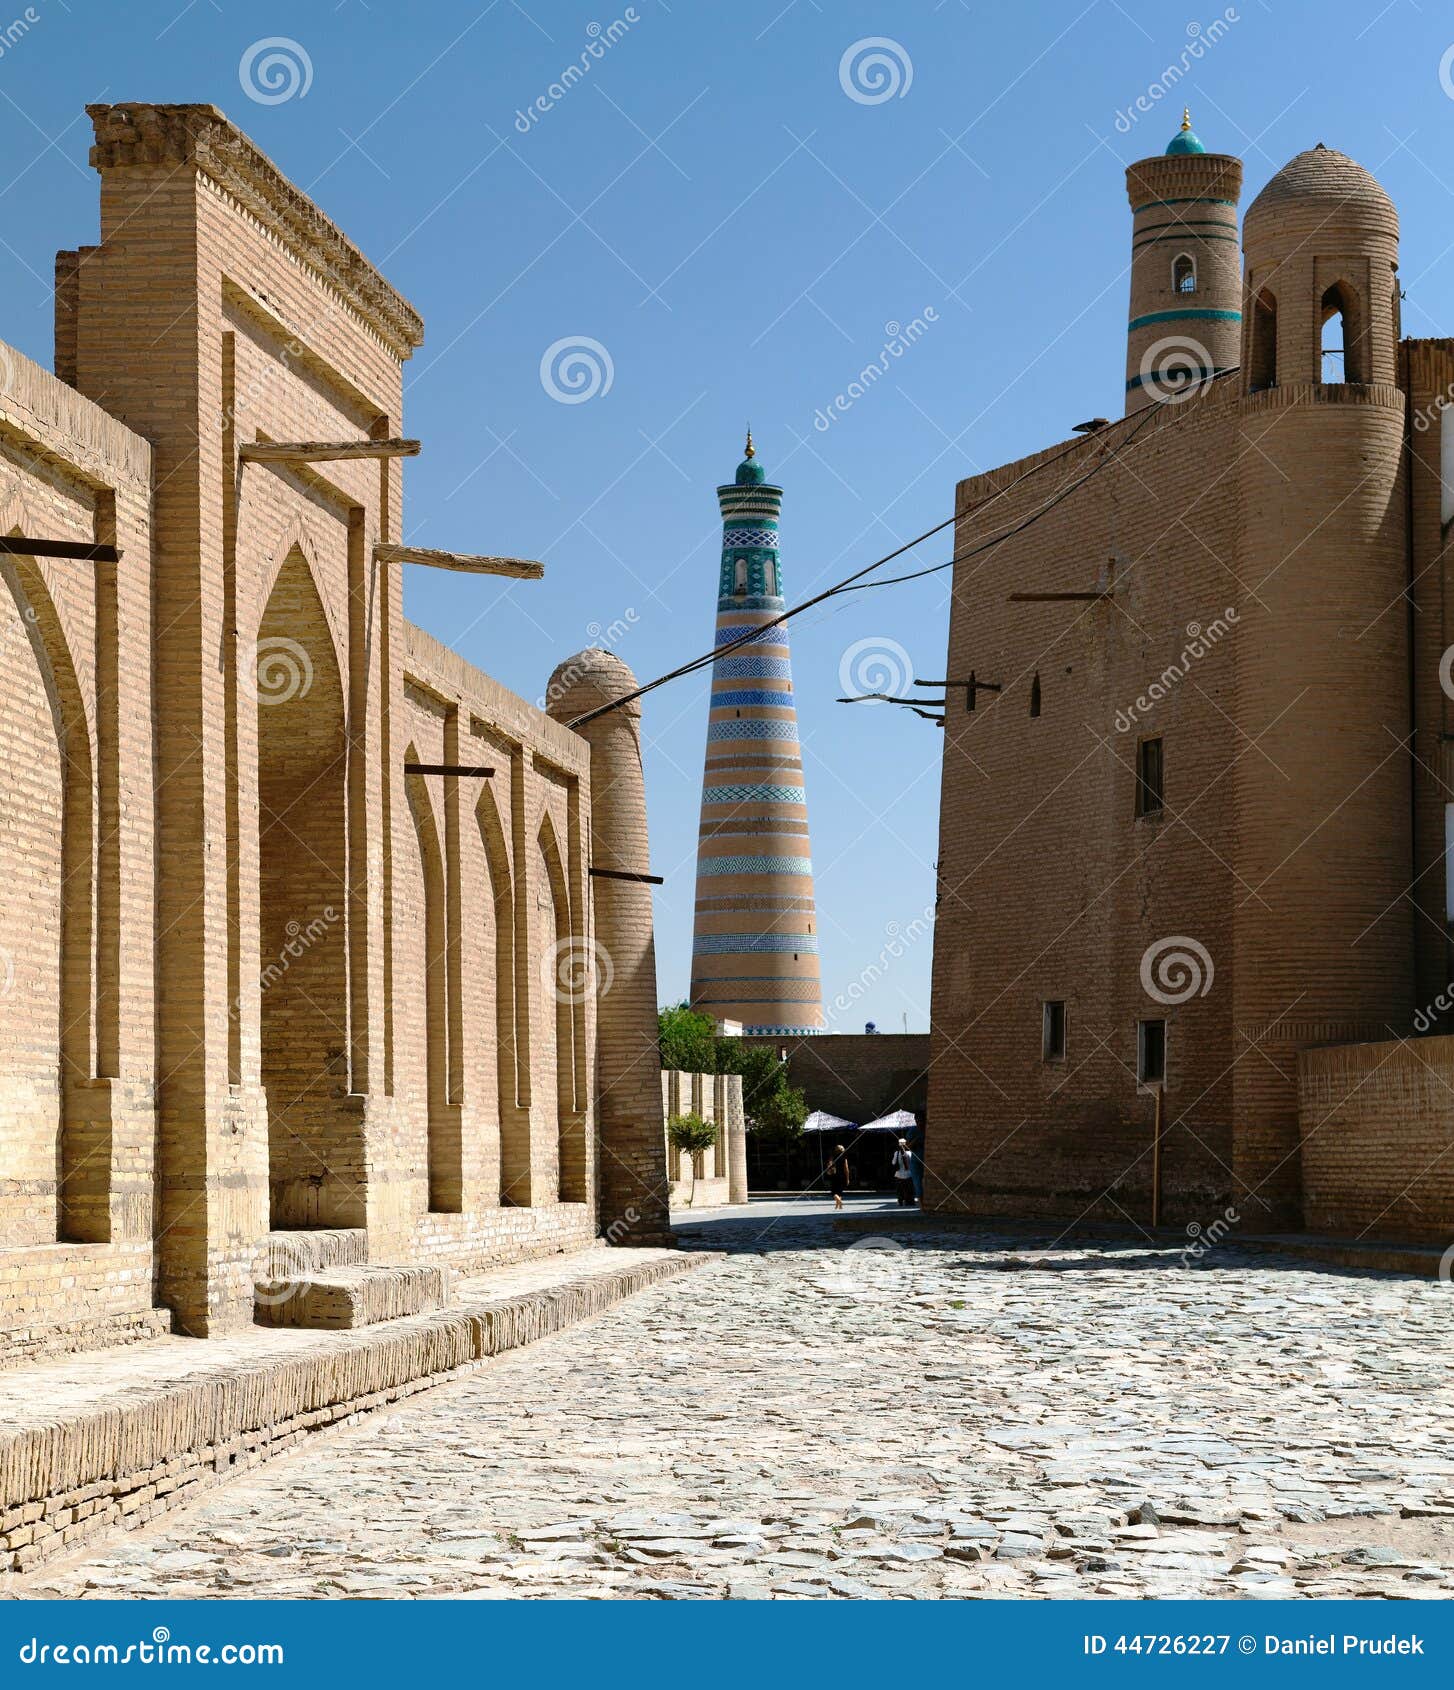 islom hoja minaret - khiva - uzbekistan